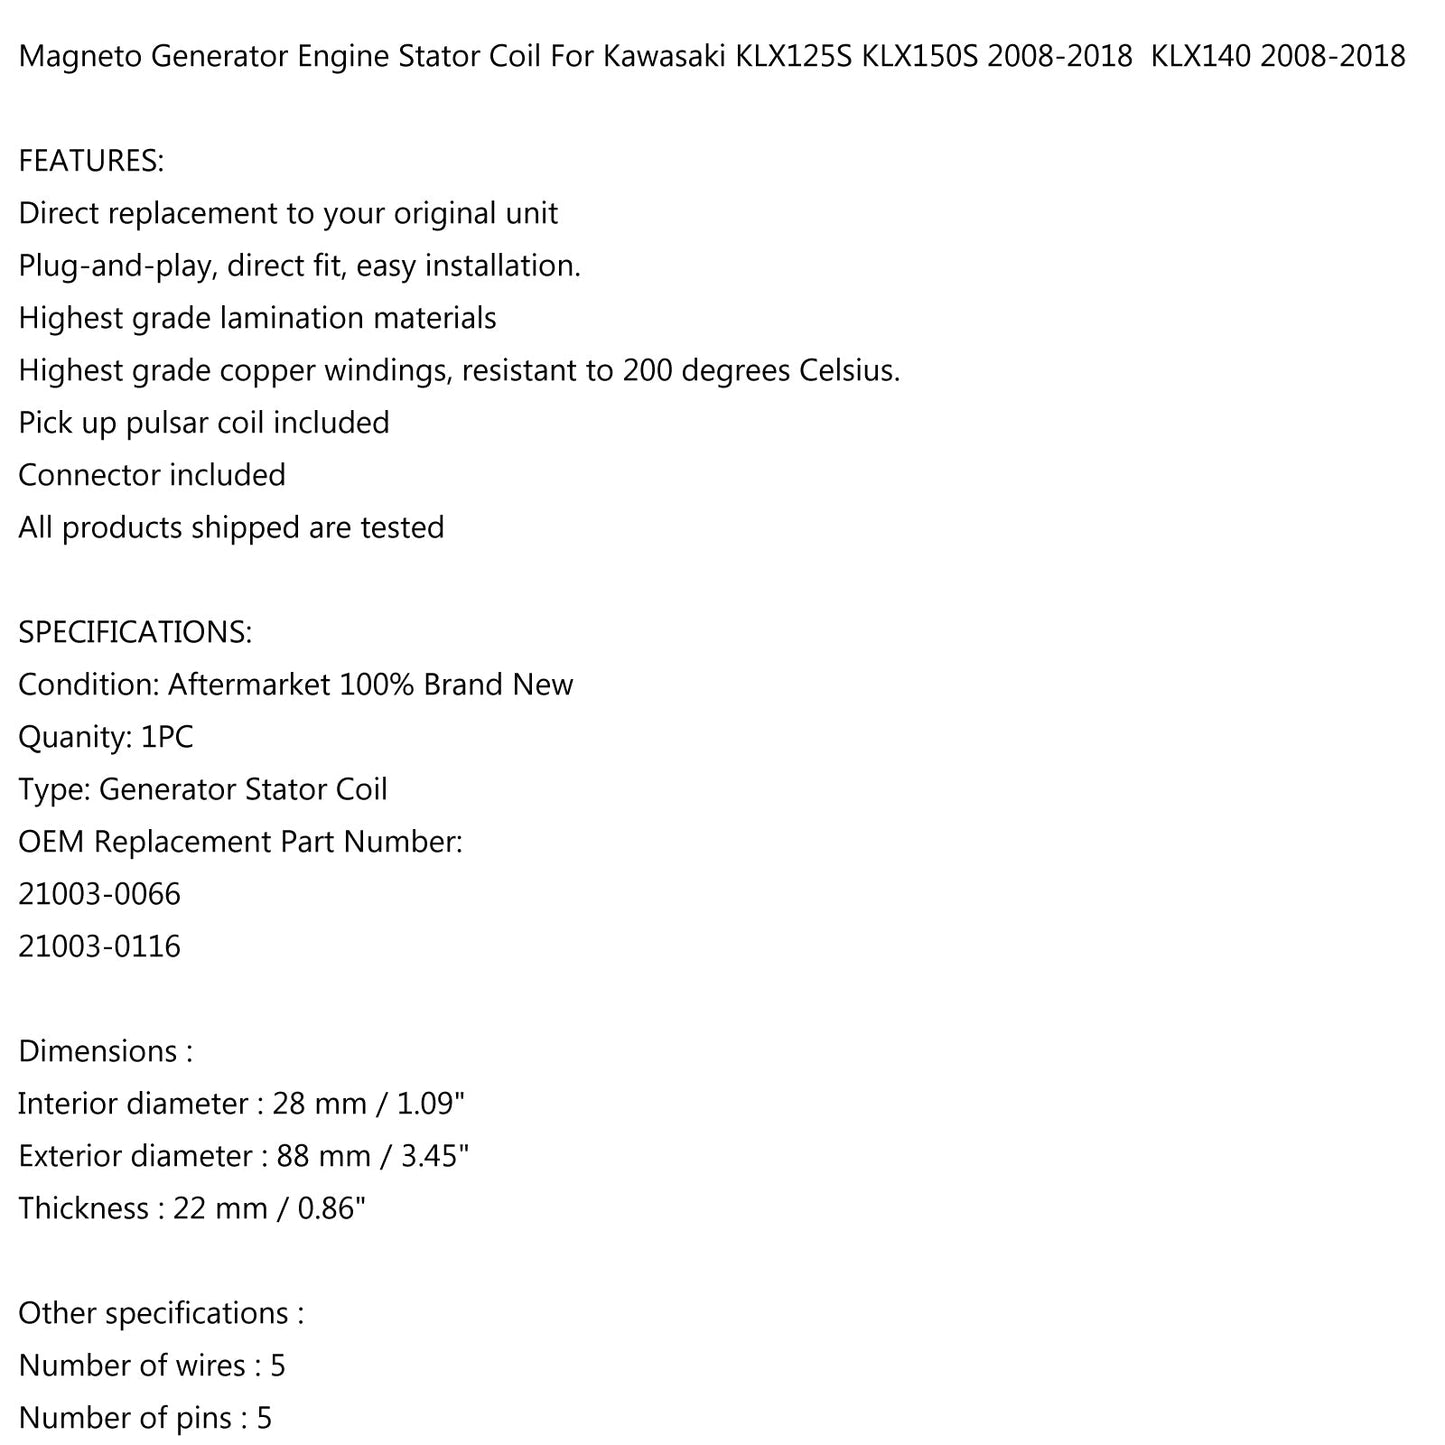 Magnetgenerator Statorspule für Kawasaki KLX125S KLX150S KLX140 L A G 08-18 Generikum